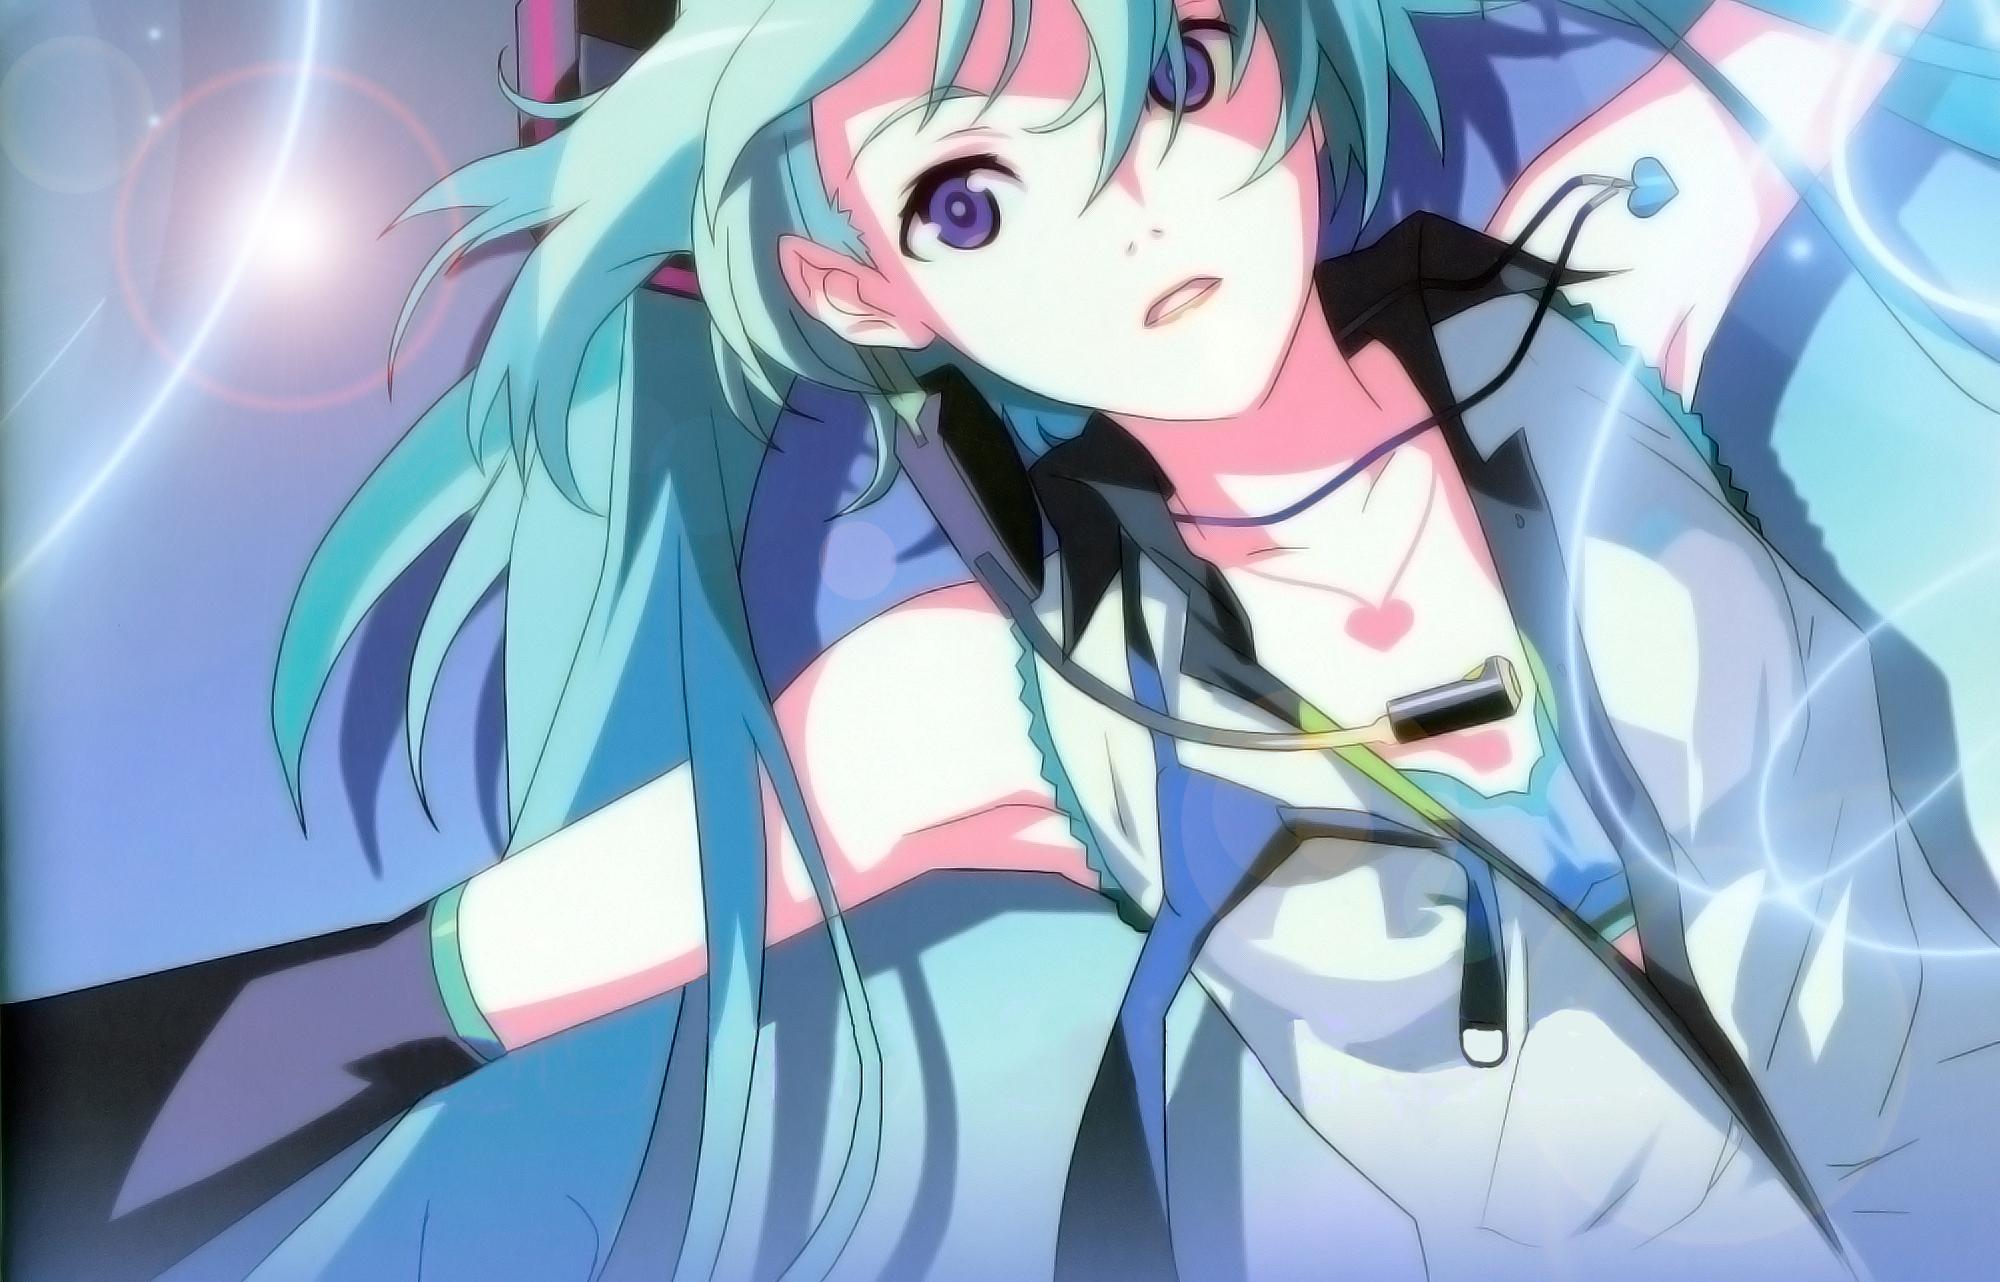 Vocaloid, Hatsune Miku, blue hair, pigtails, twintails, anime, anime girls, detached sleeves - desktop wallpaper